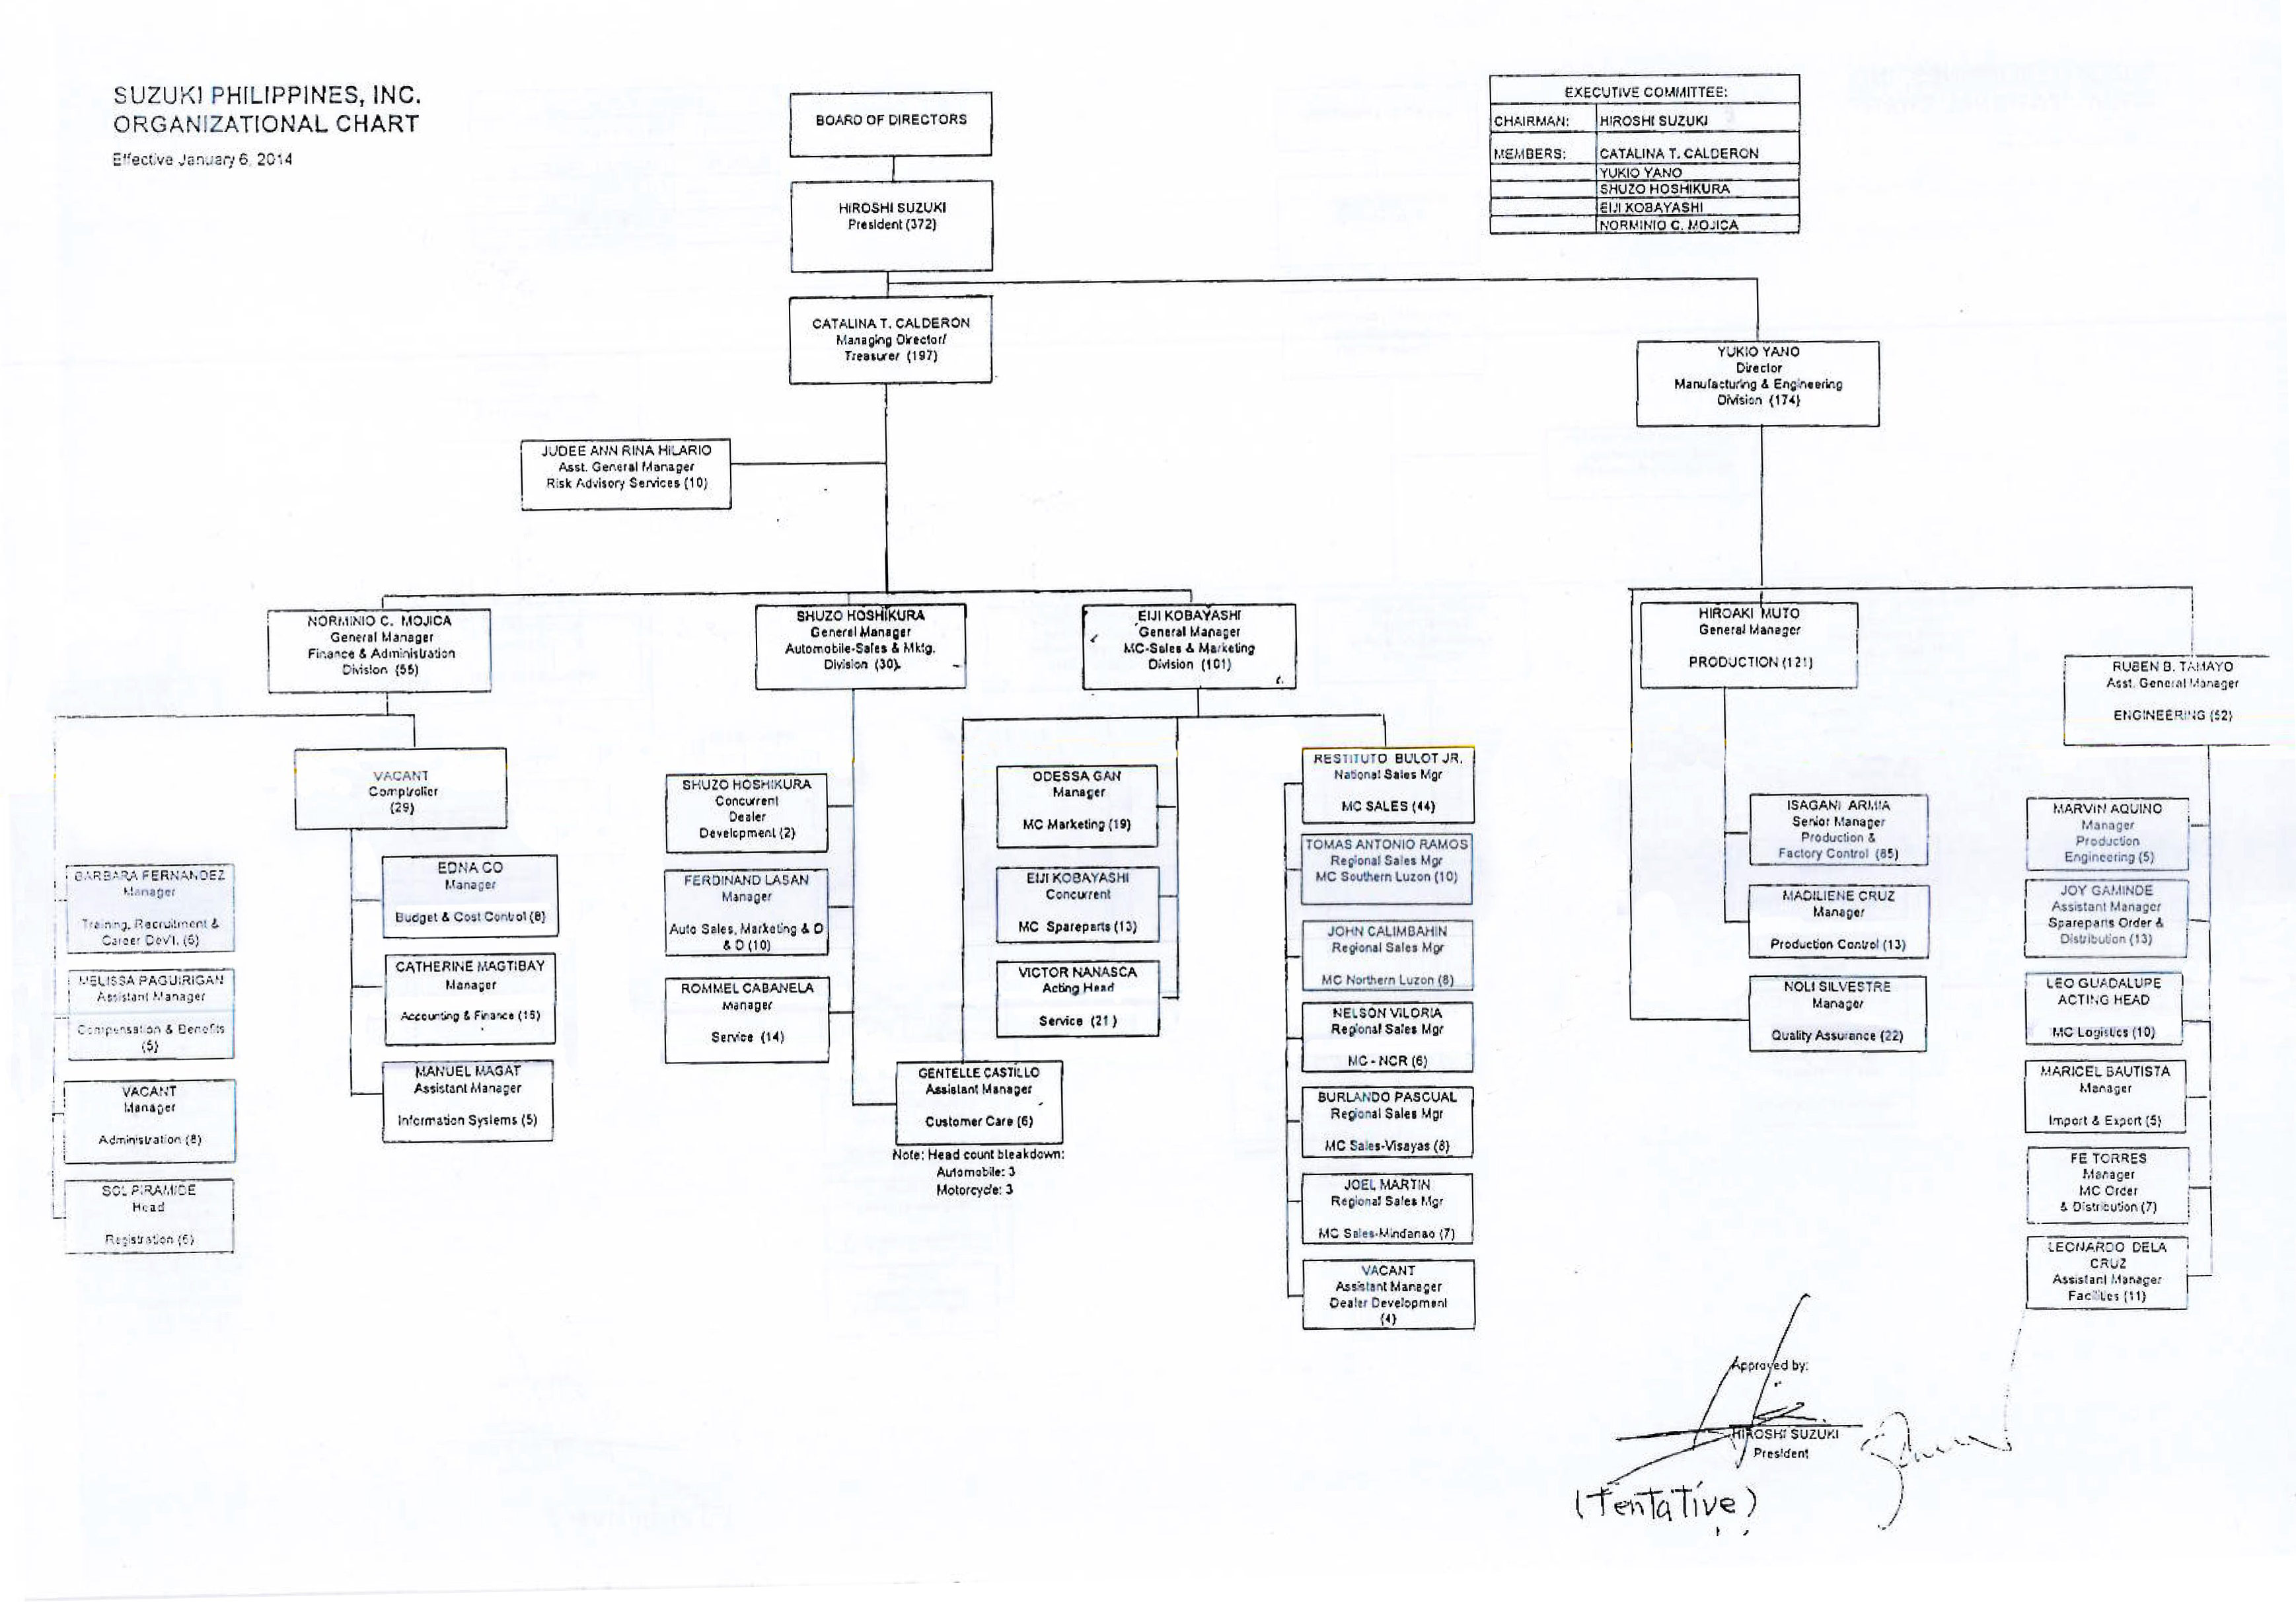 Honda organisation structure #1